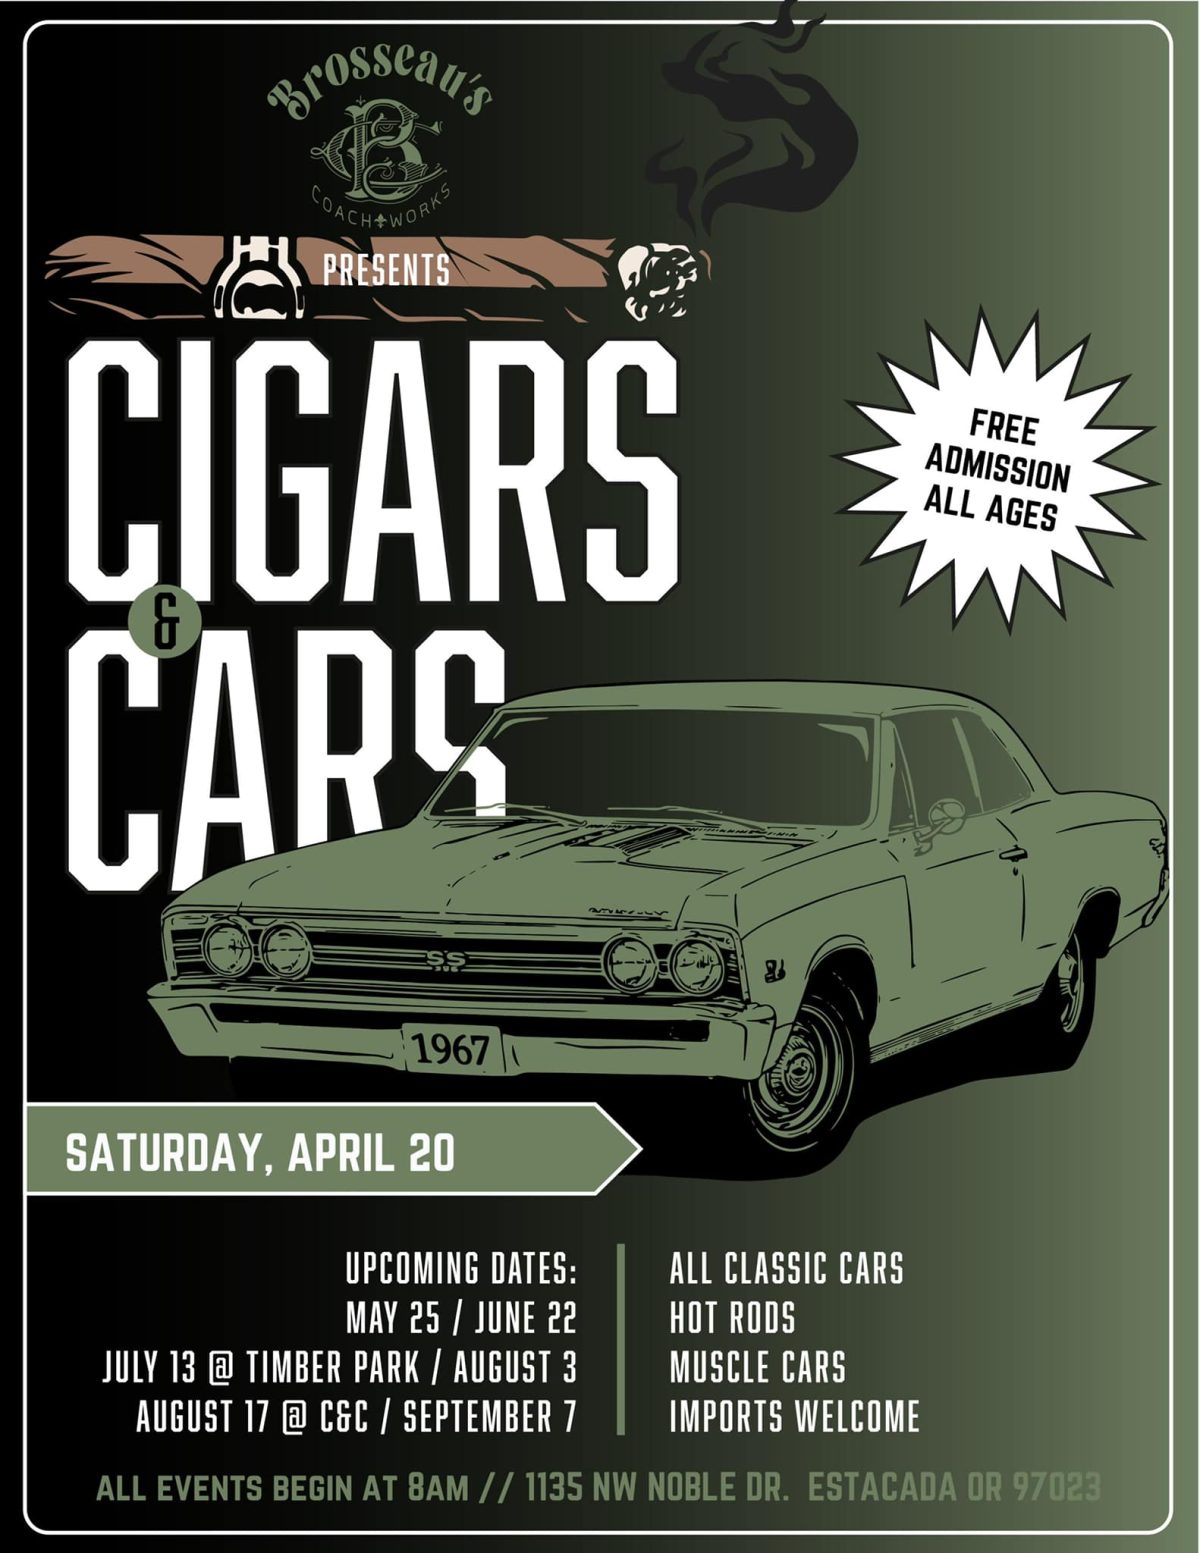 Brosseau’s Cigars & Cars